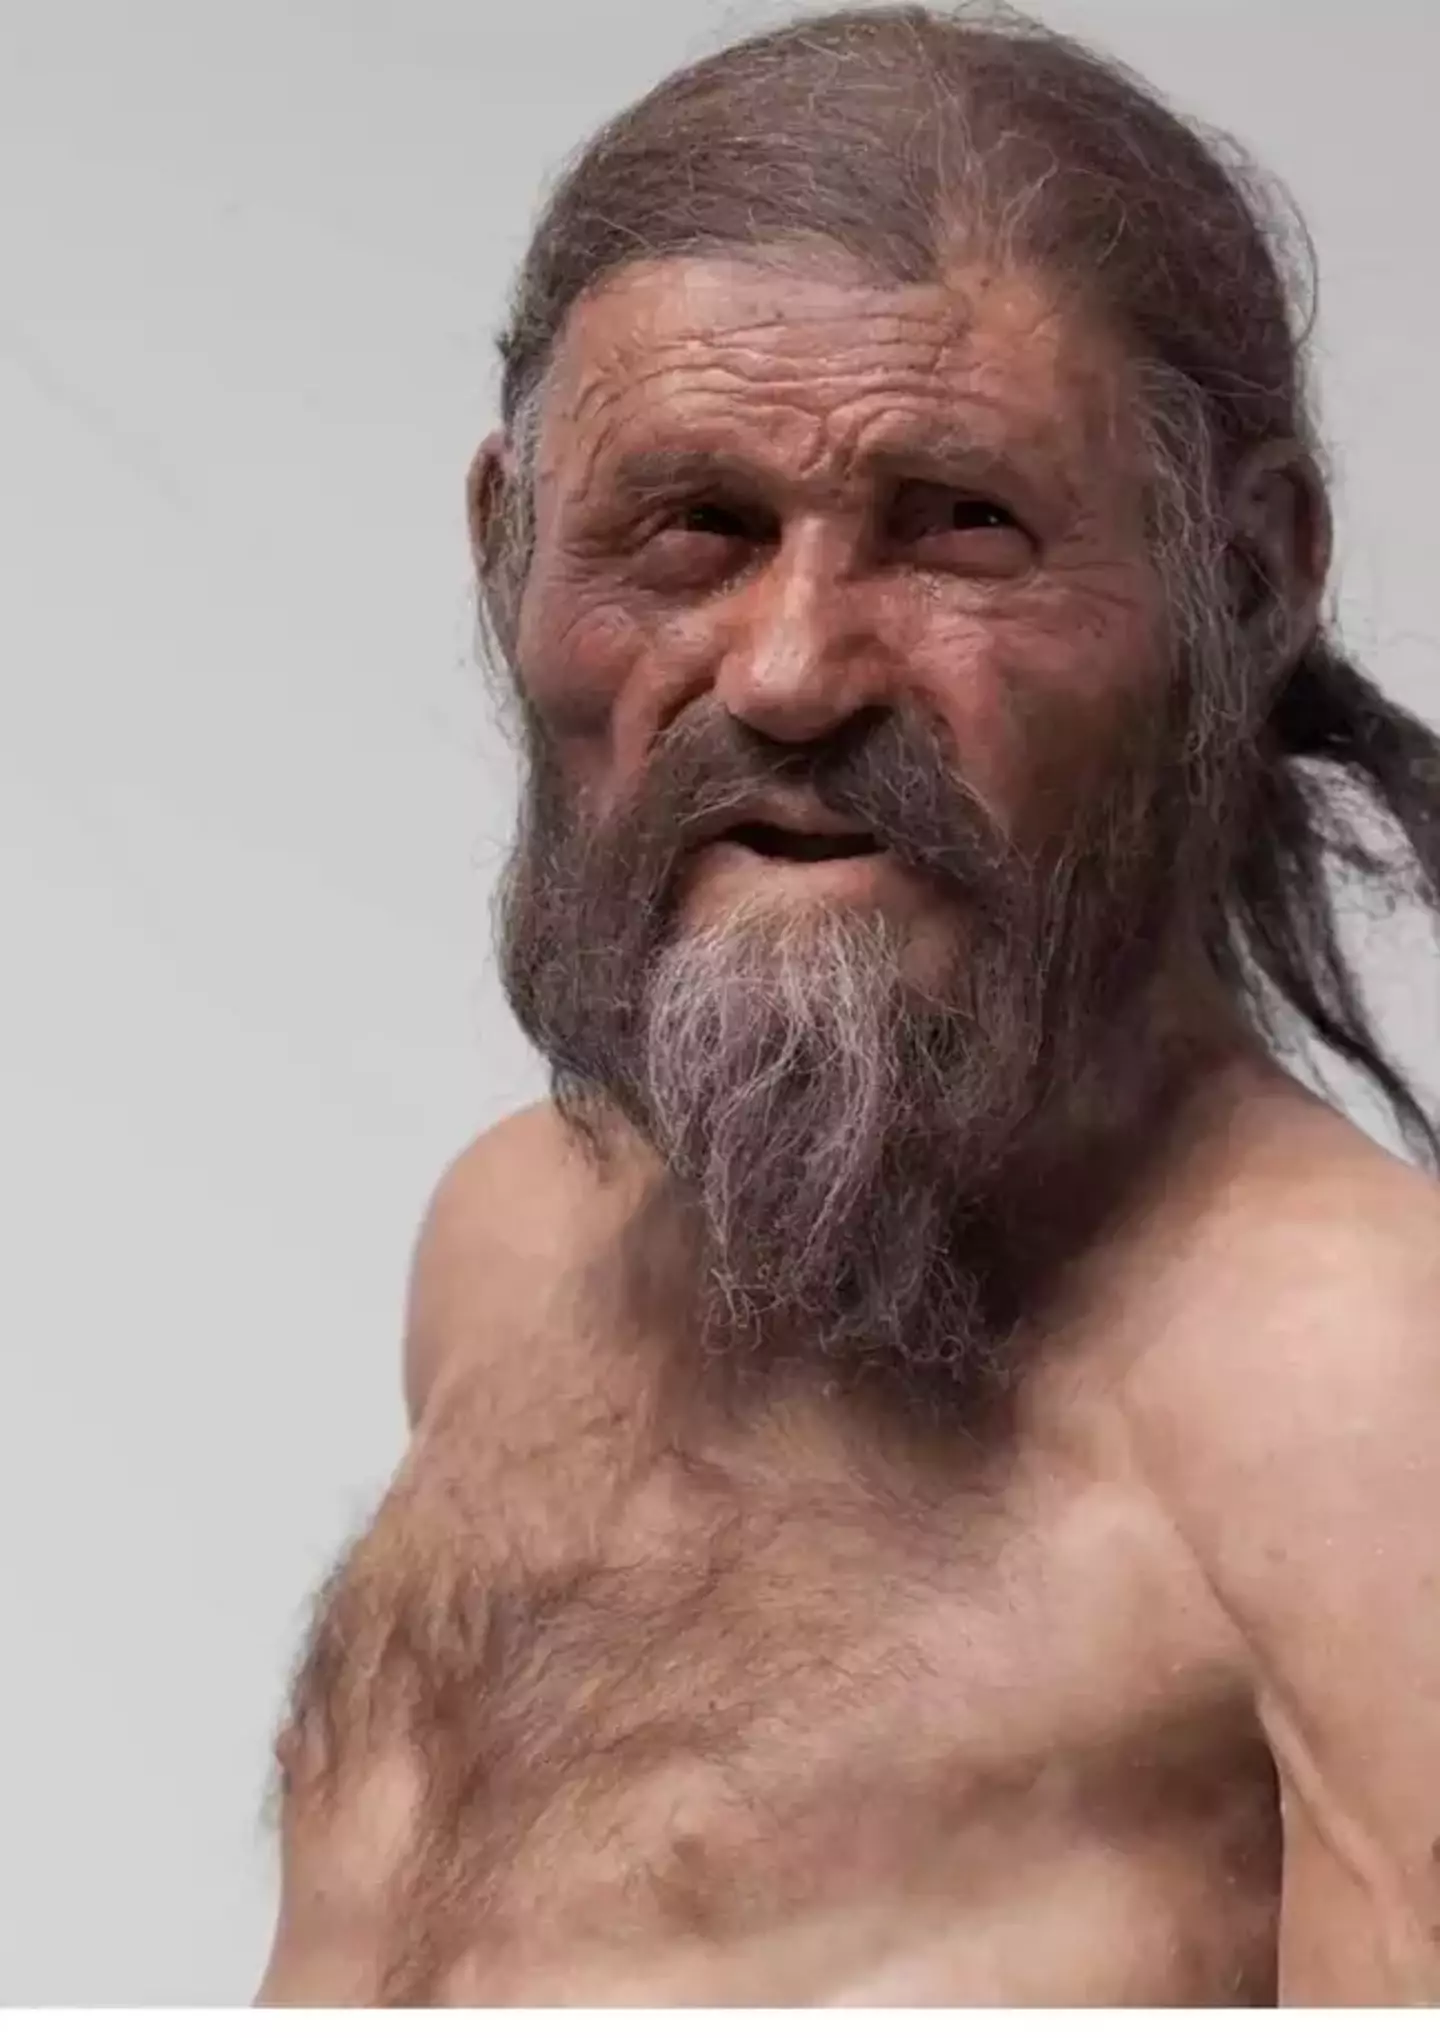 Say hello to Ötzi the Iceman.